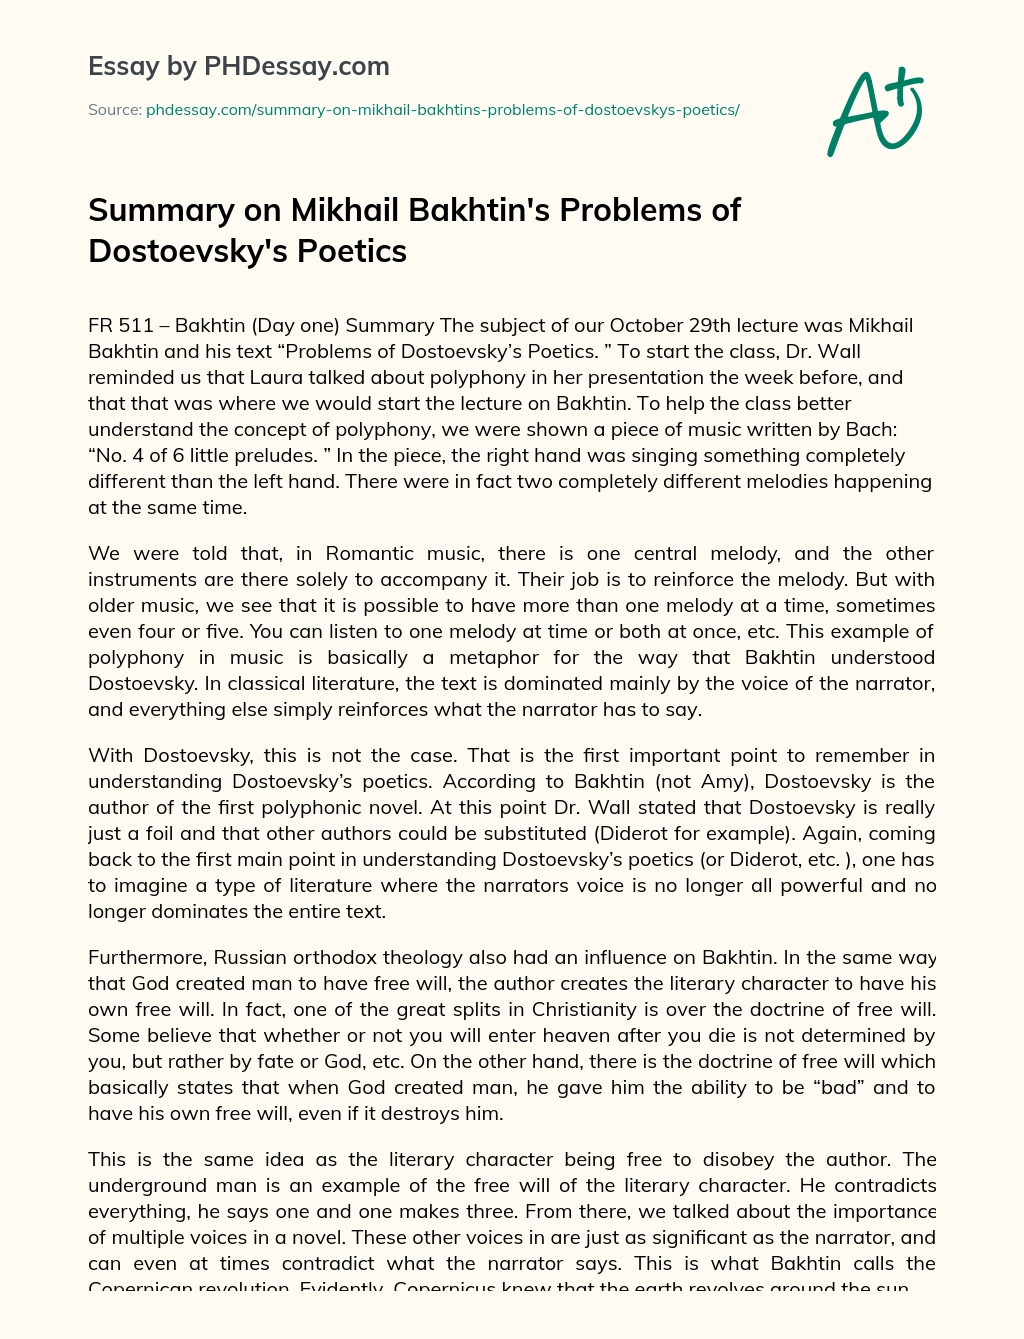 Summary on Mikhail Bakhtin’s Problems of Dostoevsky’s Poetics essay